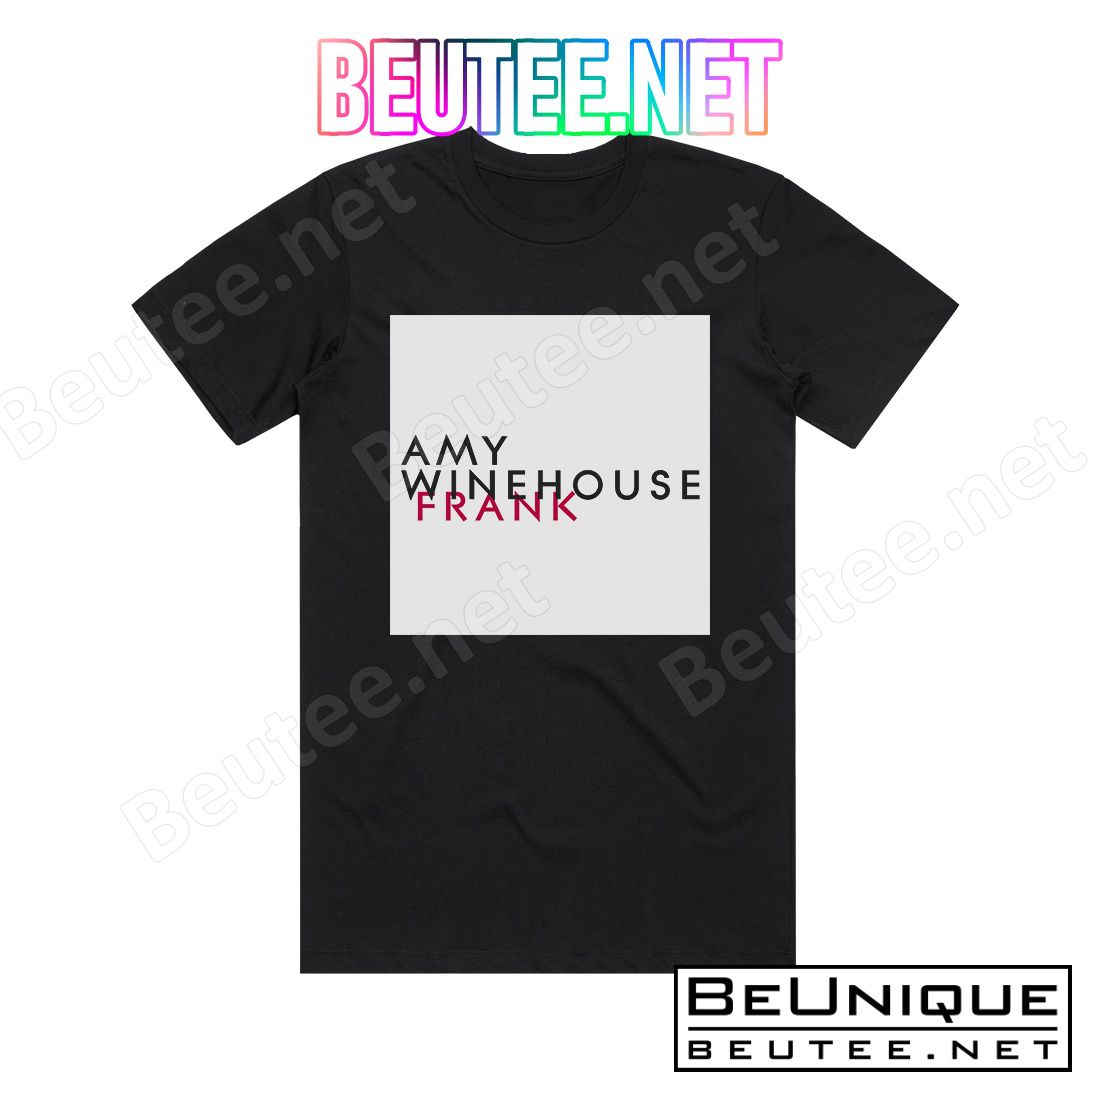 Amy Winehouse Frank 2 Album Cover T-Shirt